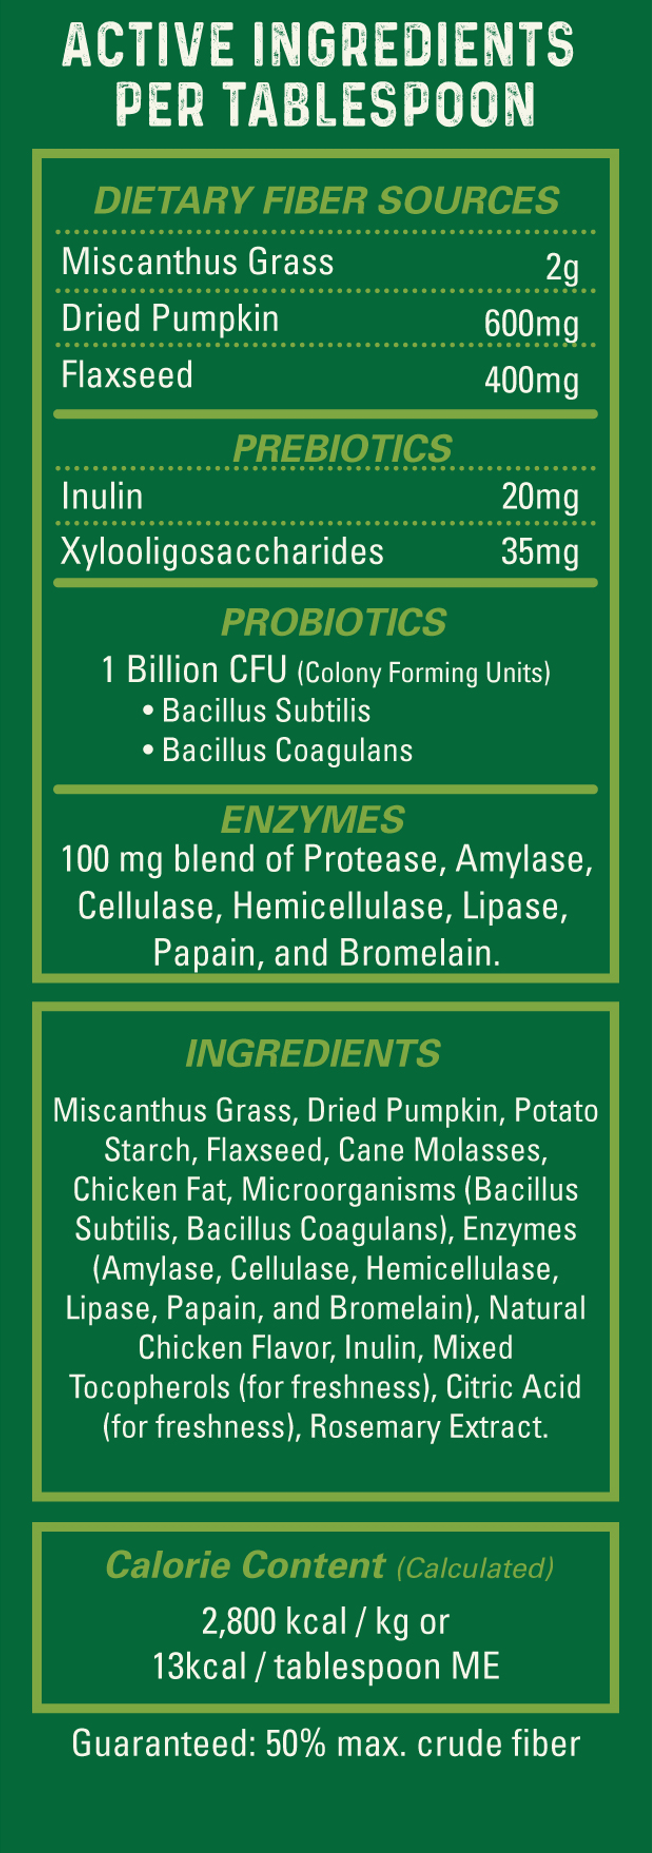 Infographic of active ingredients.